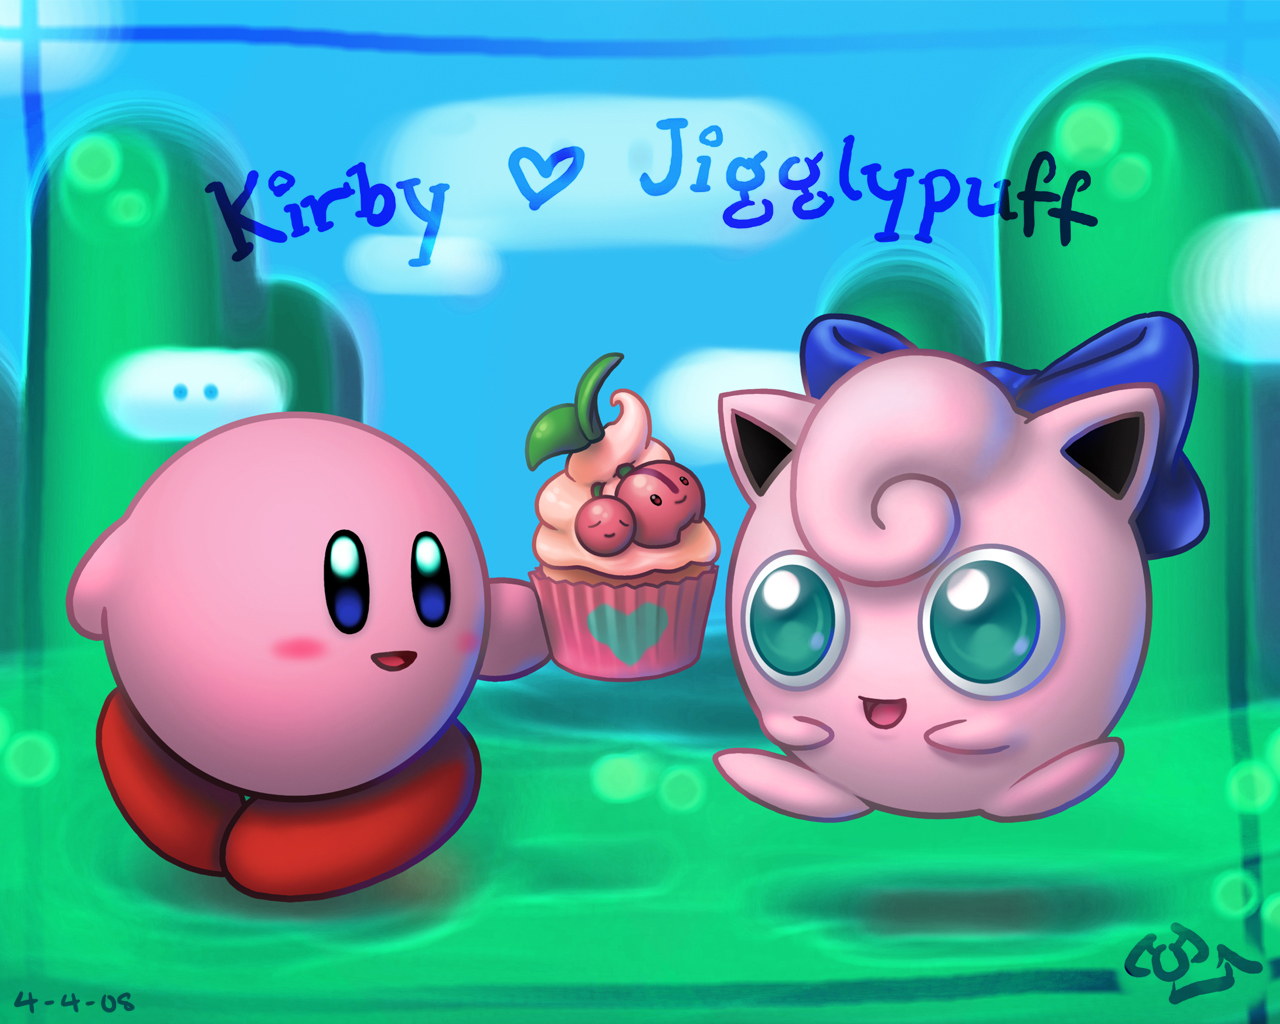 Kirby_x_Jigglypuff___wallpaper_by_K_6.jpg